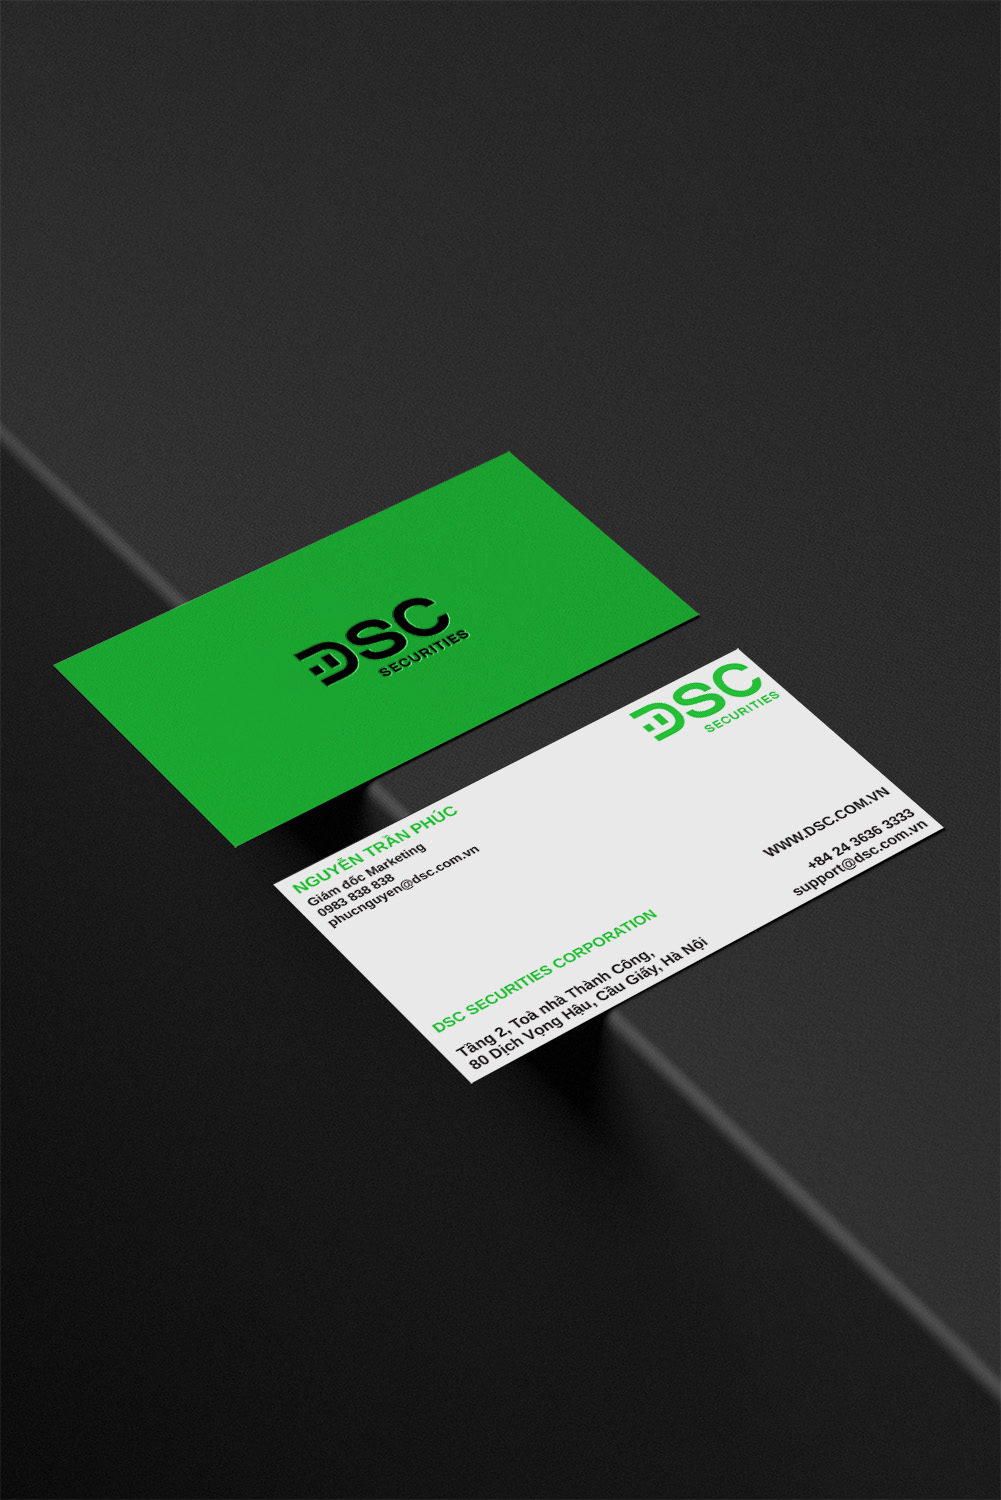 DSC Business card mock-up